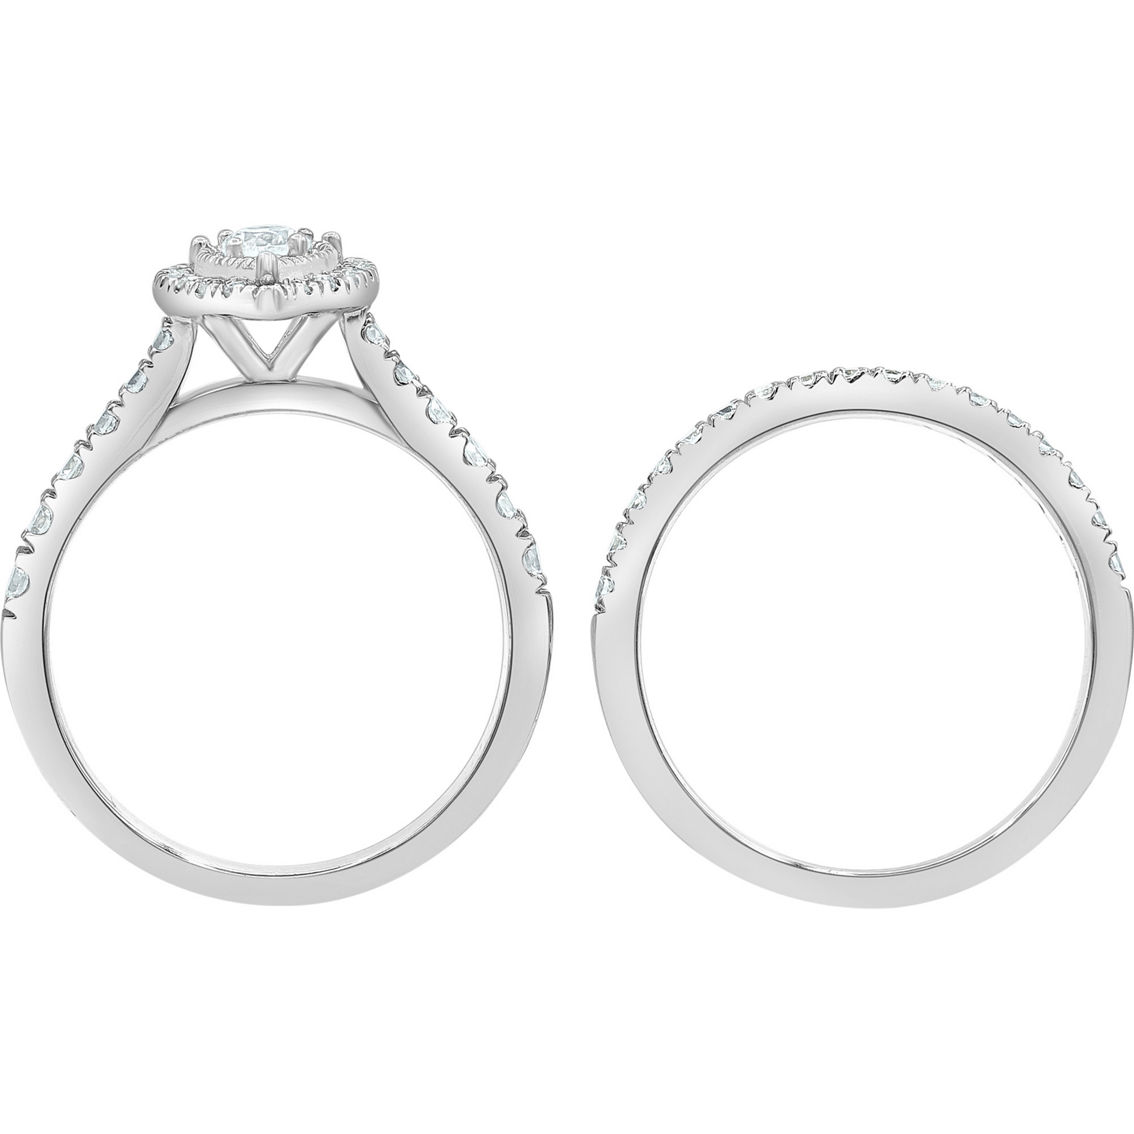 10K White Gold 1 CTW Pear Shape Diamond Bridal Set - Image 3 of 4